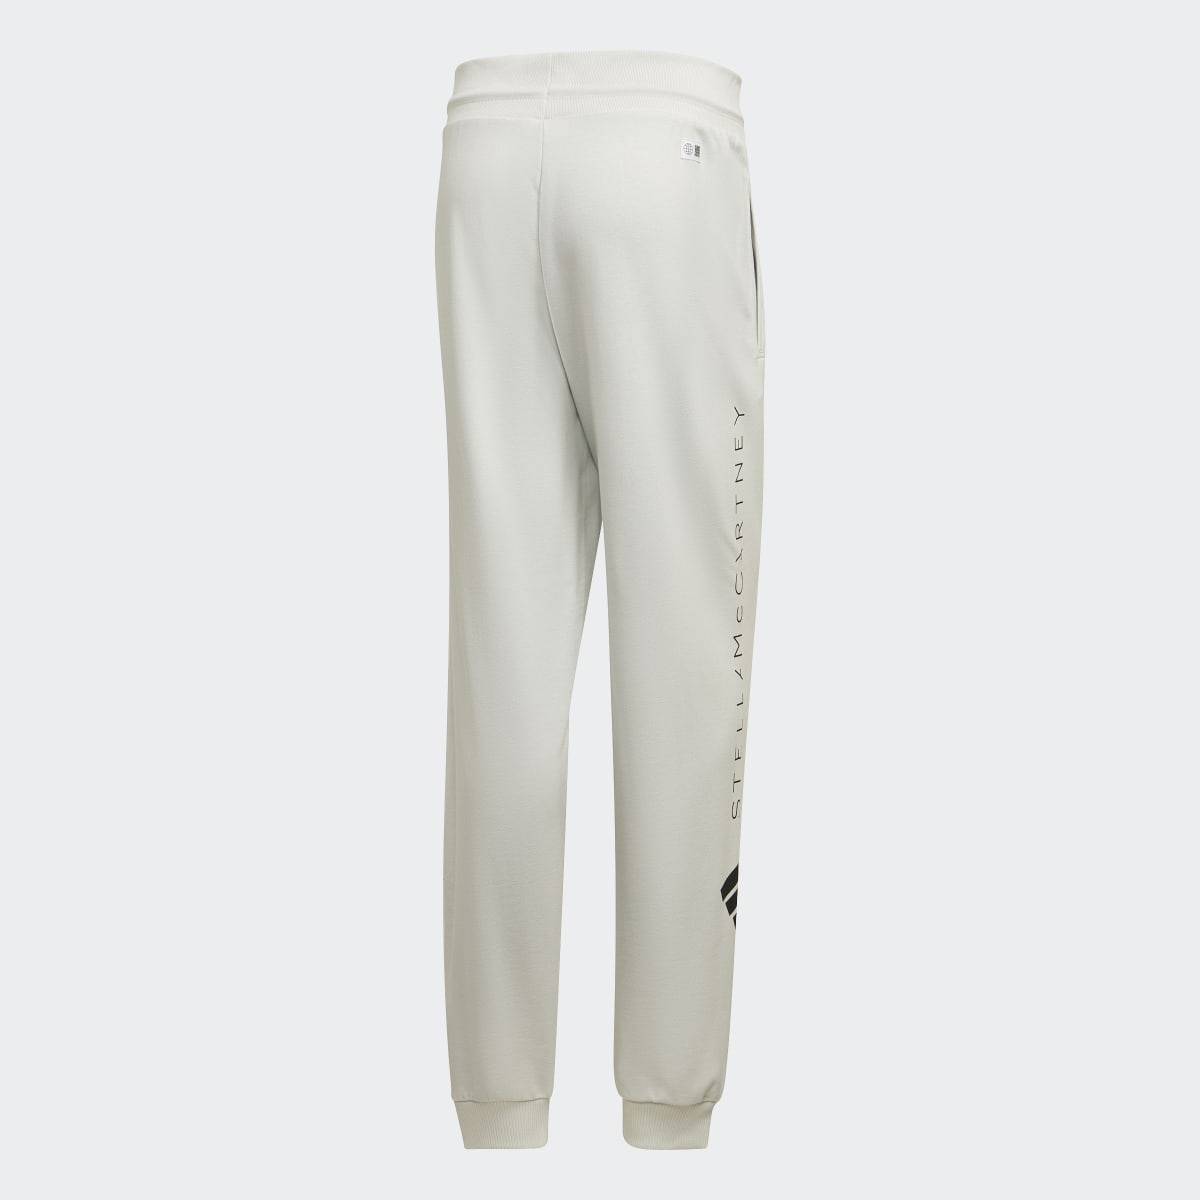 Adidas Pantaloni adidas by Stella McCartney Sportswear Regenerated Cellulose (Neutral). 7